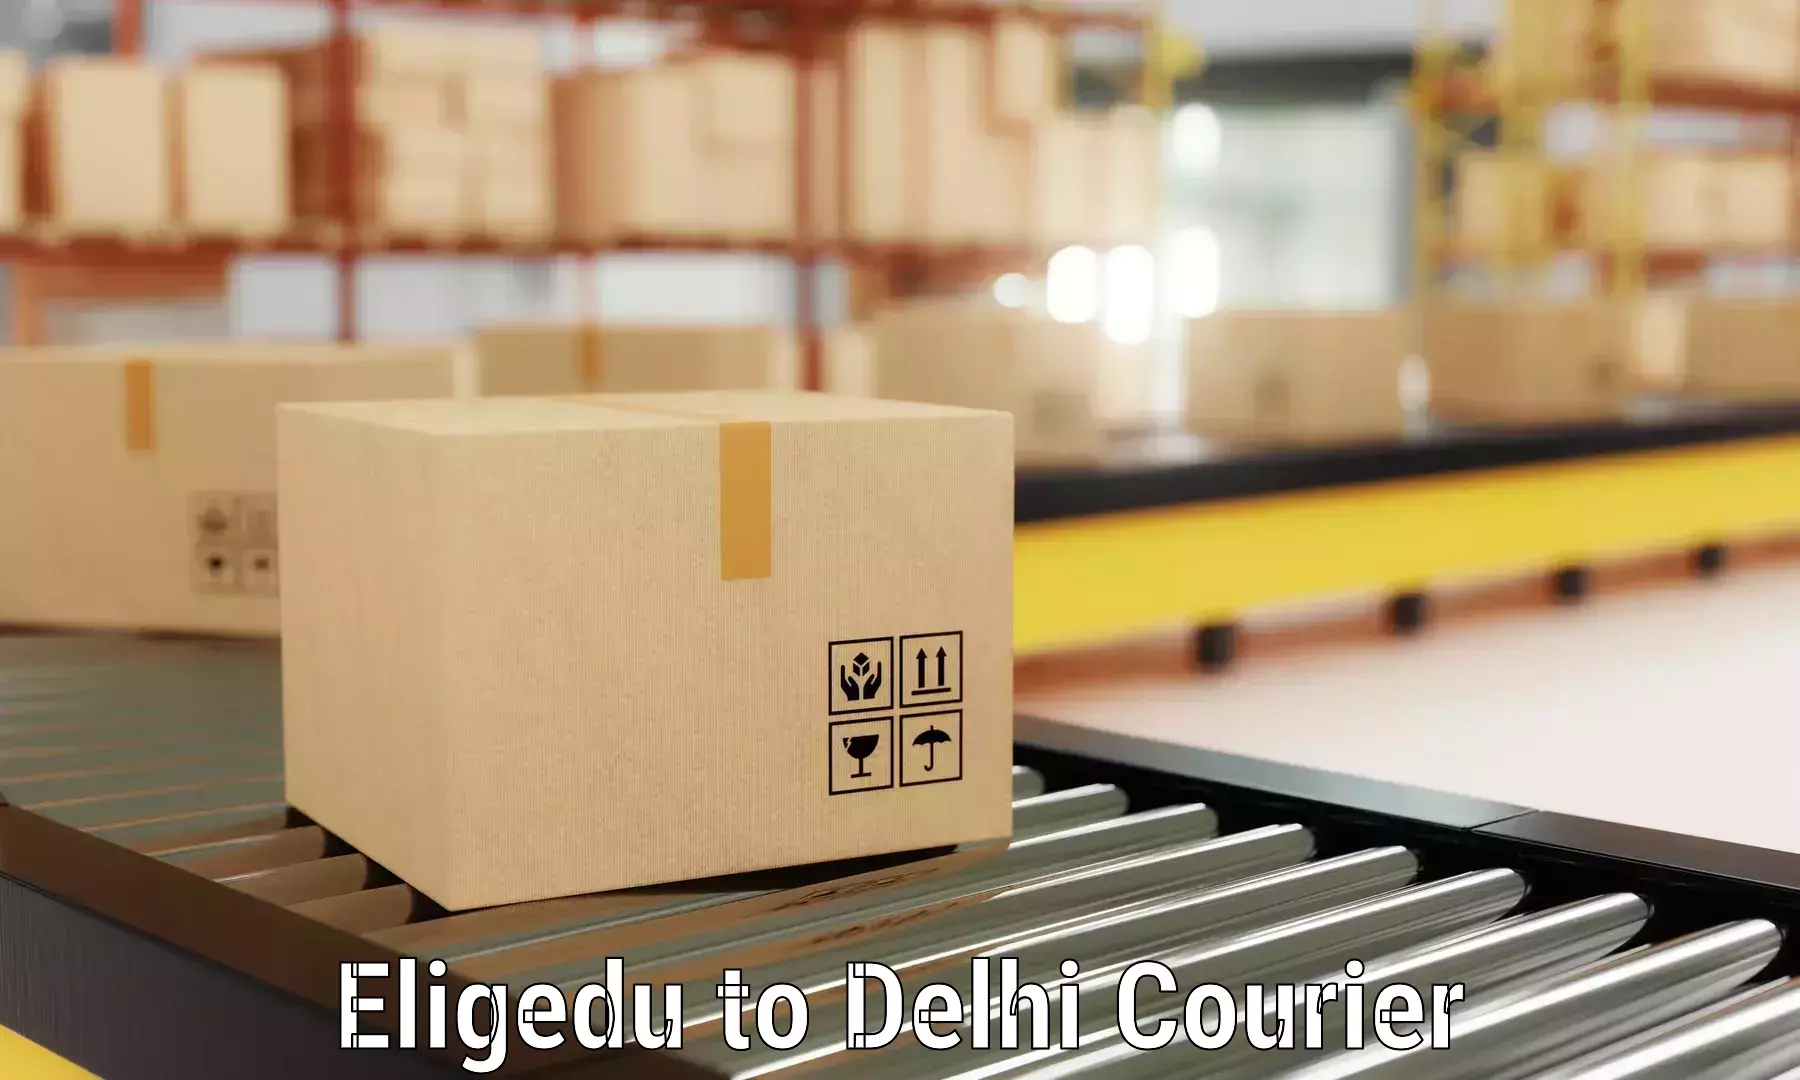 Professional goods transport Eligedu to Delhi